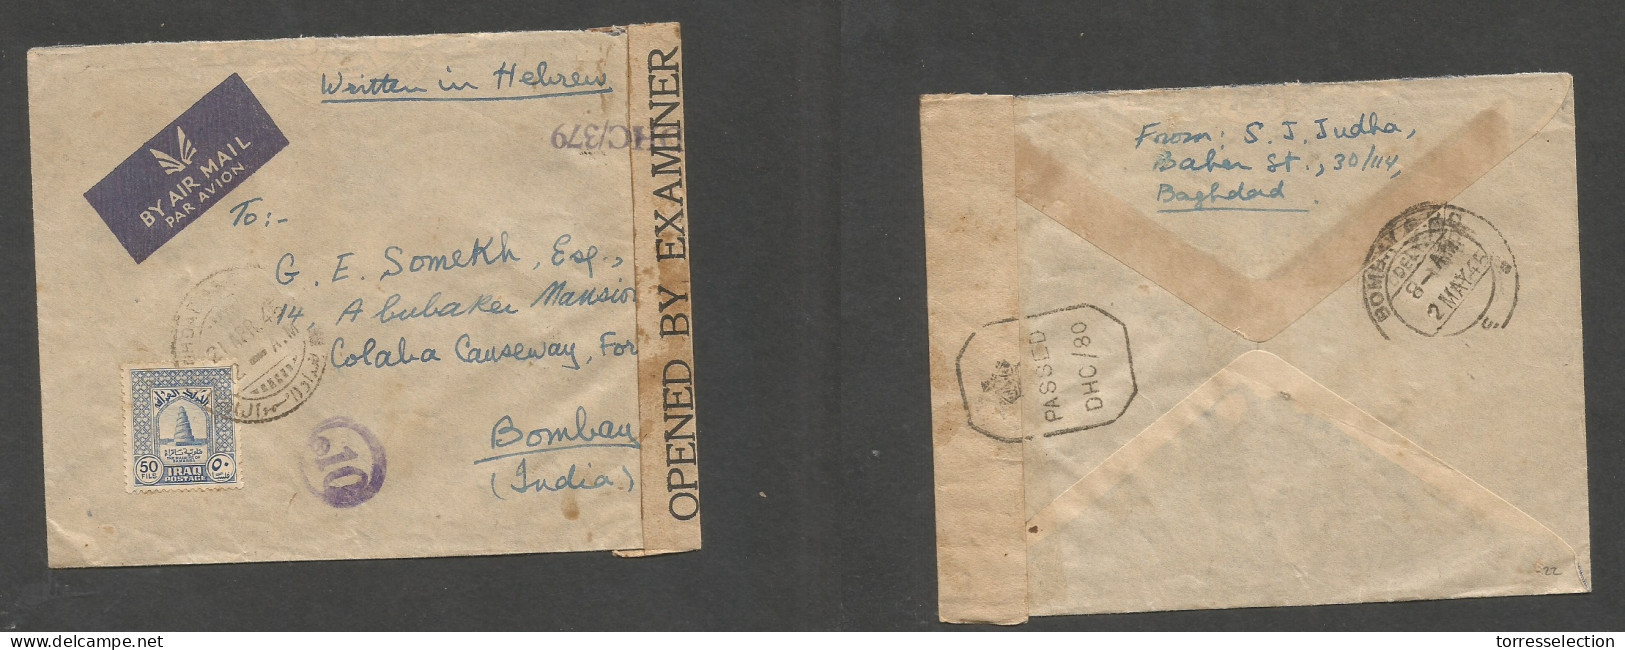 IRAQ. 1945 (21 Apr) Baghdad - India, Bombay (2 May) WWII Censored Single 50 Fils Fkd Envelope Hebrew Written. Arrival Ca - Iraq